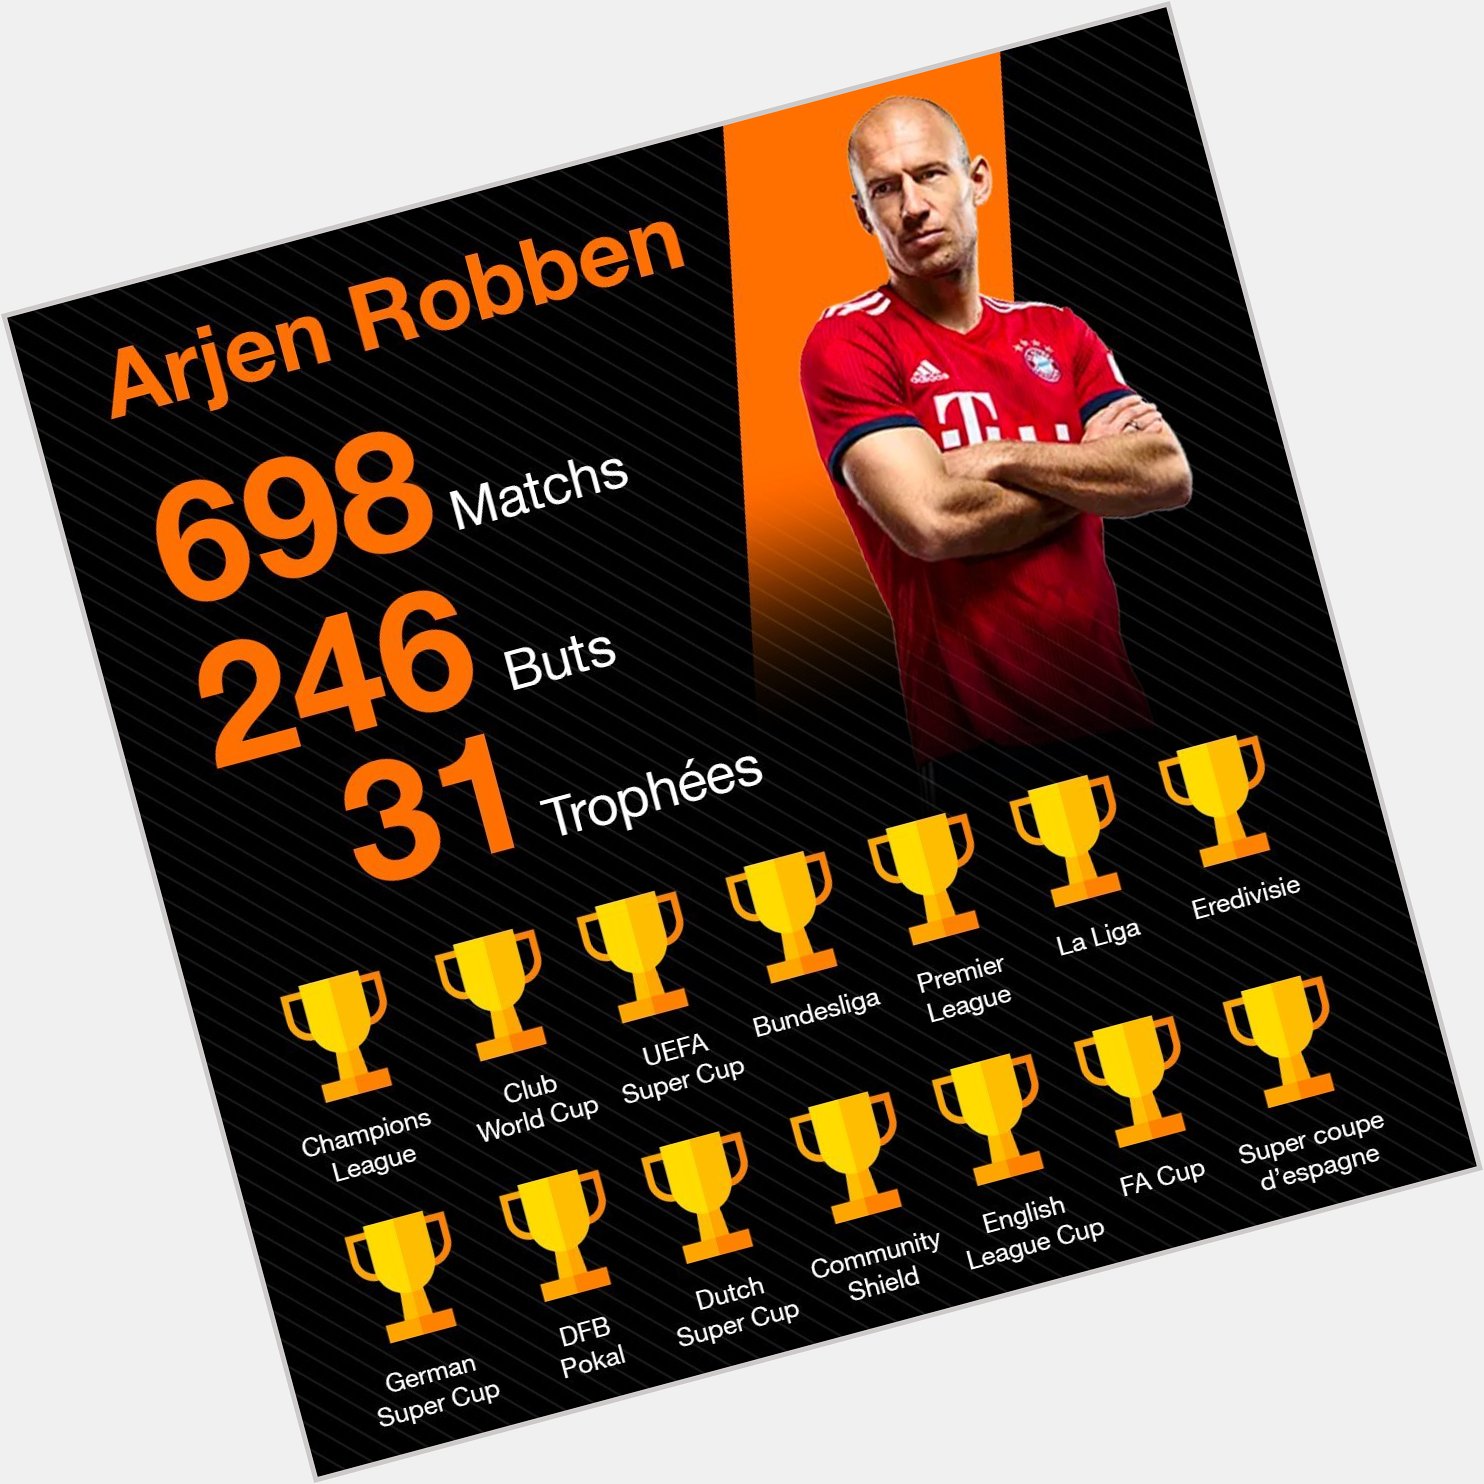 35 years, 31 team trophies, 23 individual awards. Happy Birthday Arjen Robben 